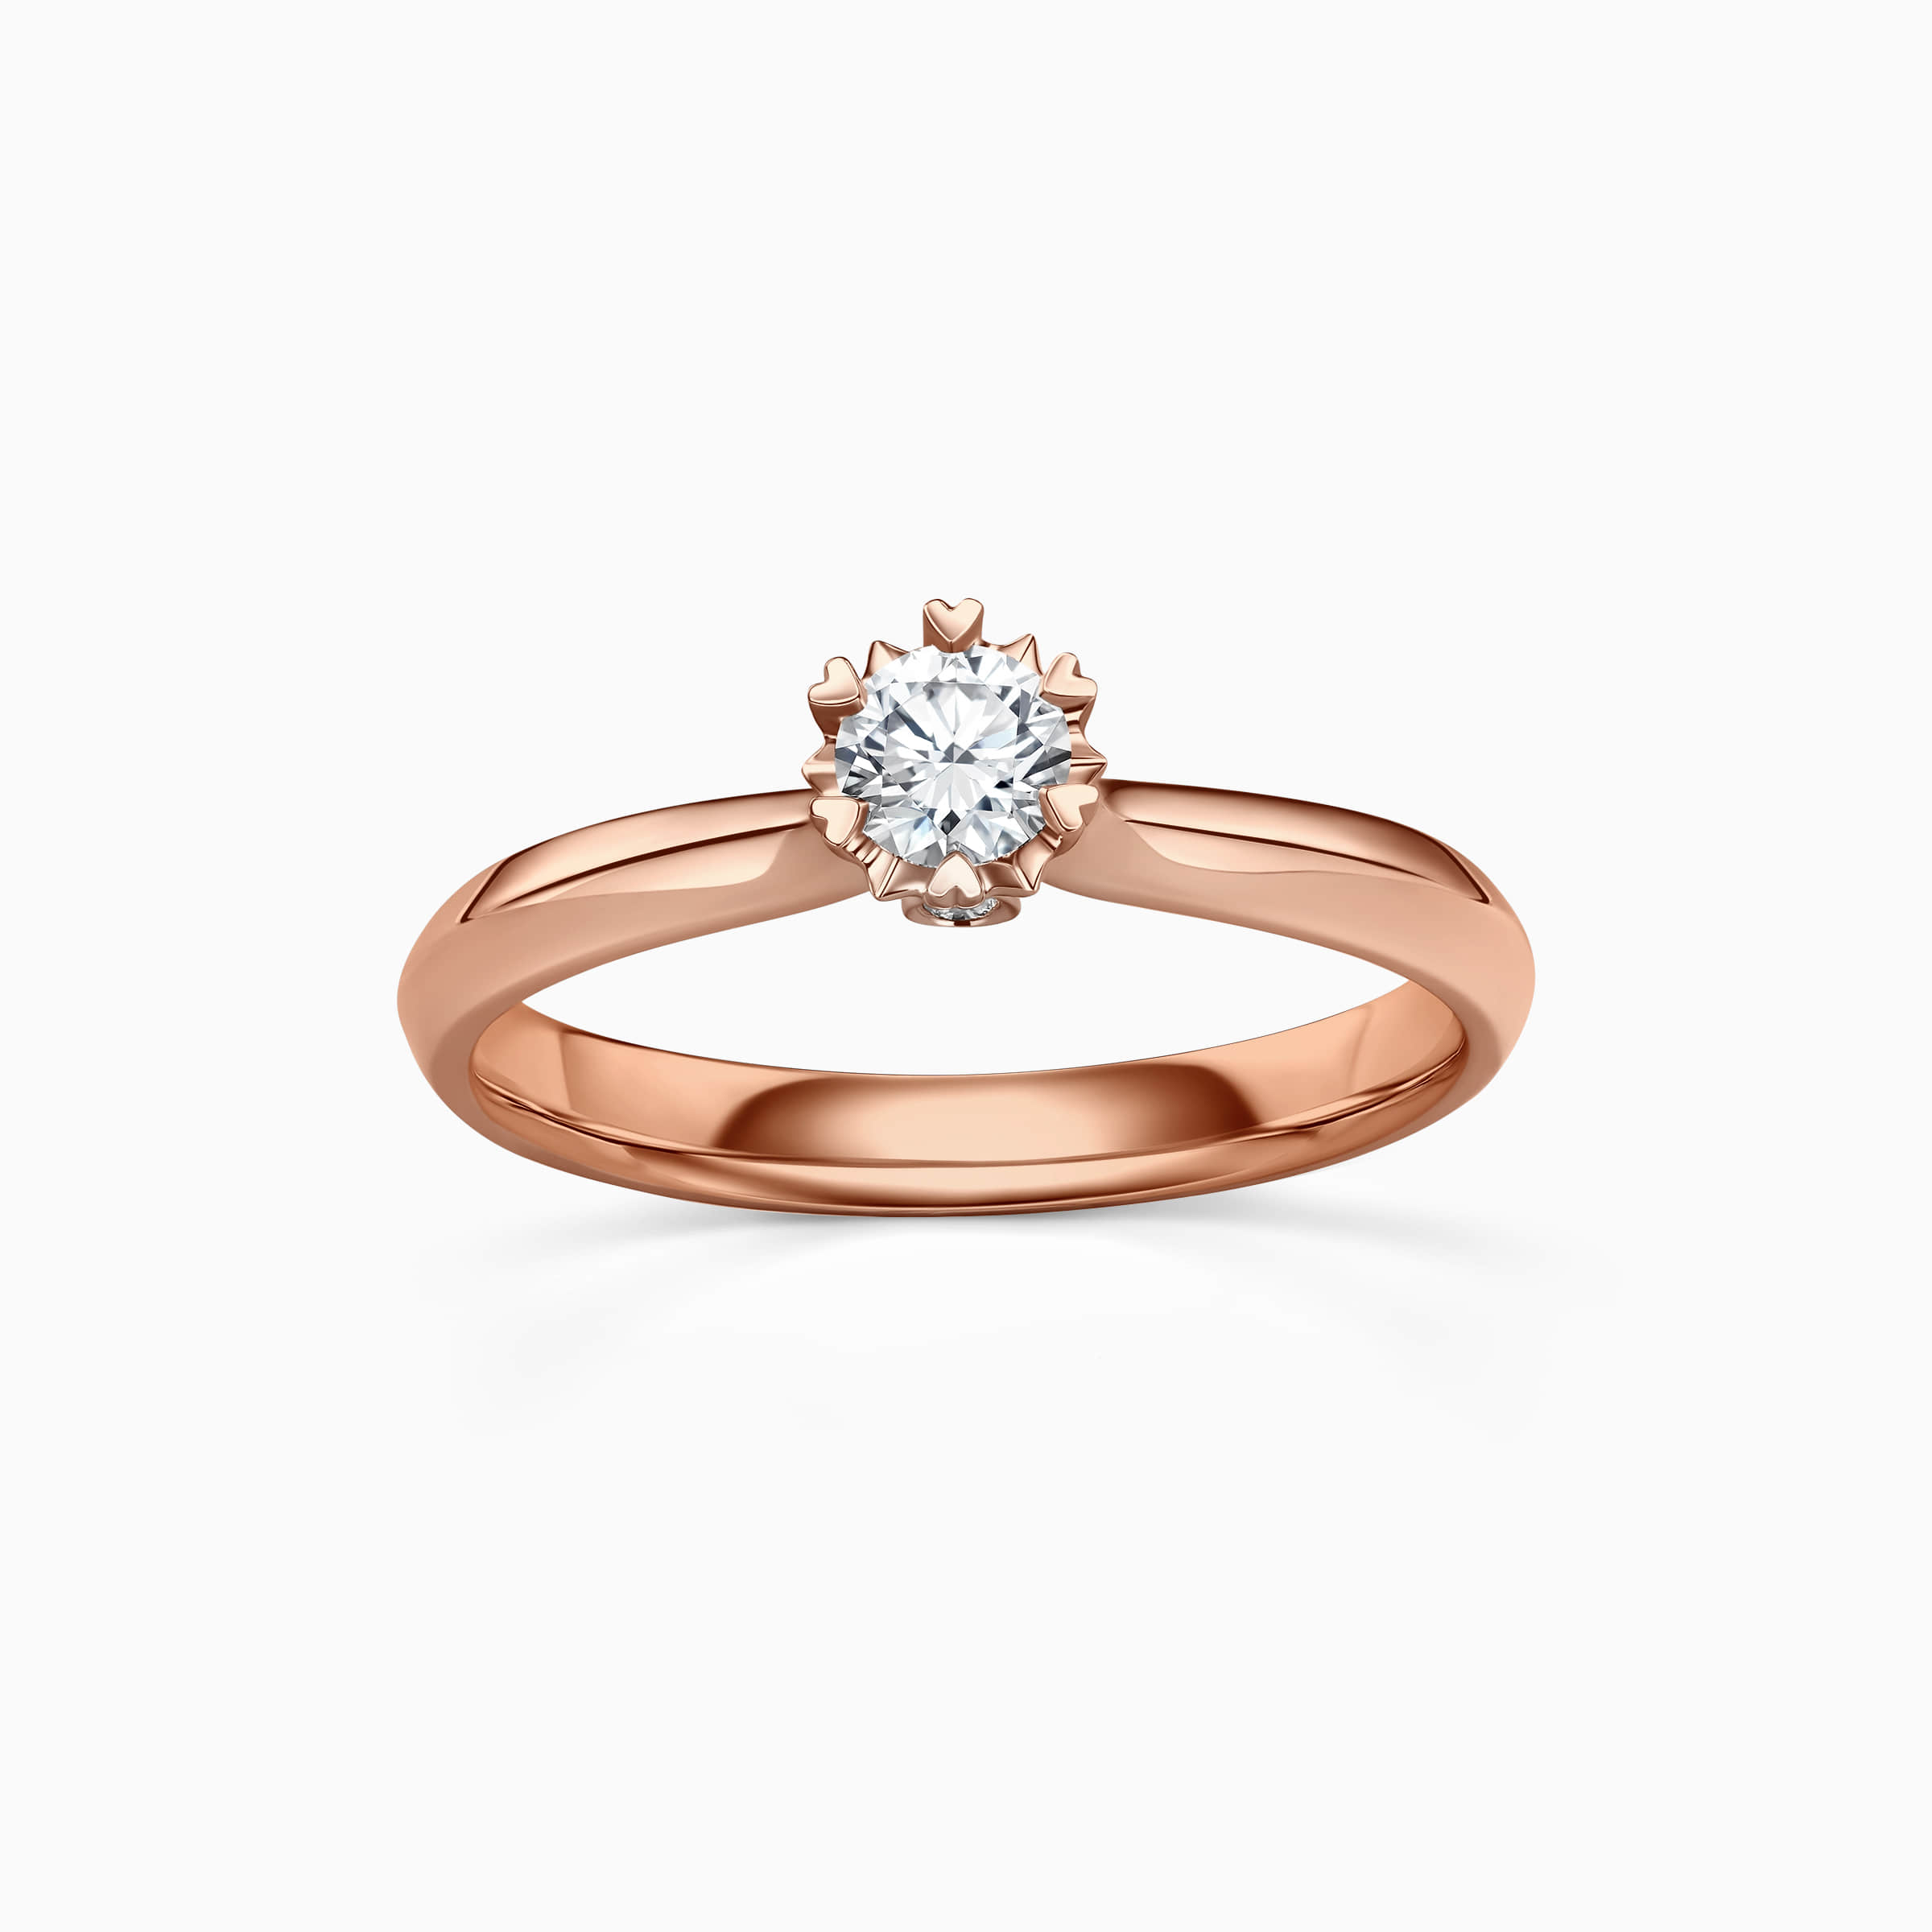 Darry Ring snowflake diamond promise ring rose gold